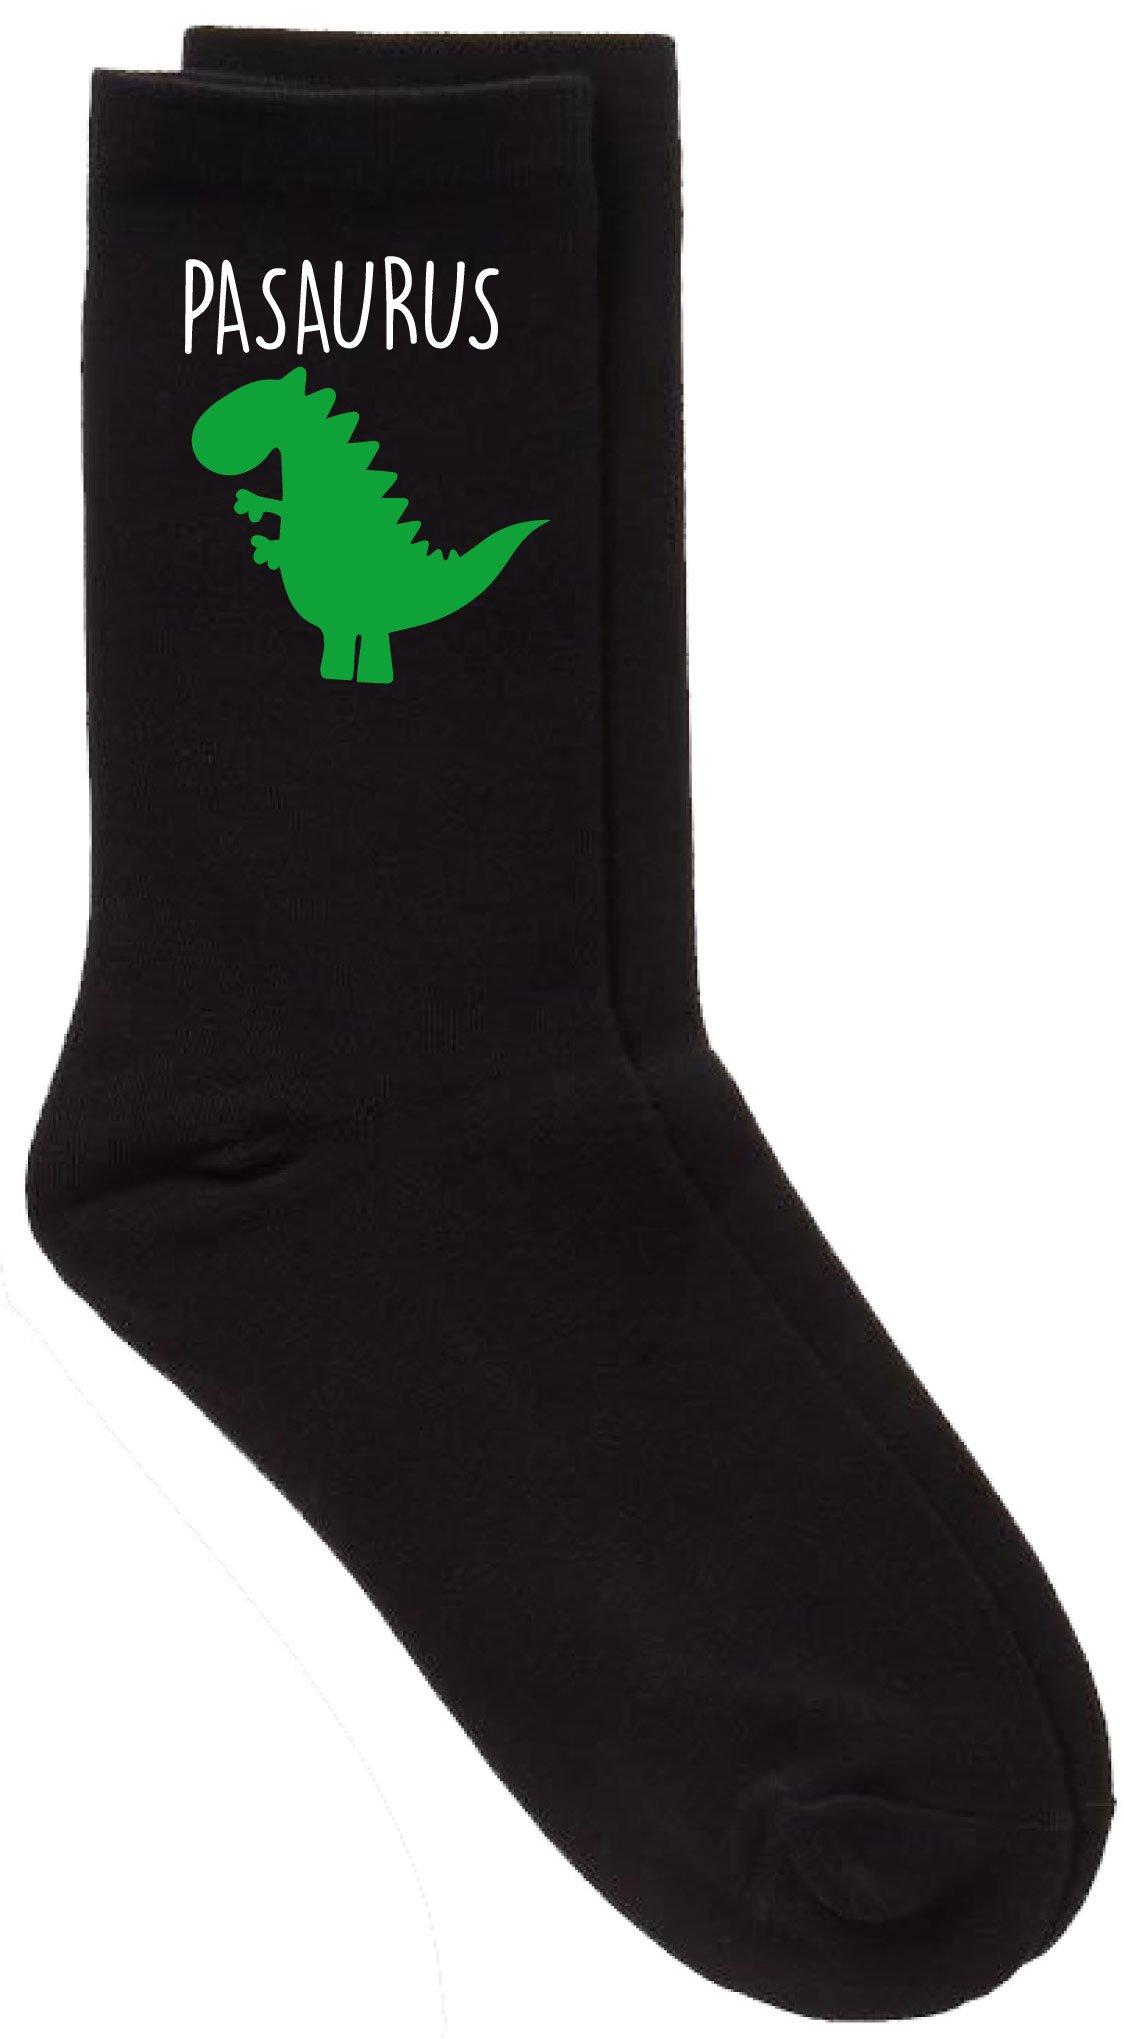 Pa Dinosaur Pasaurus Black Calf Socks